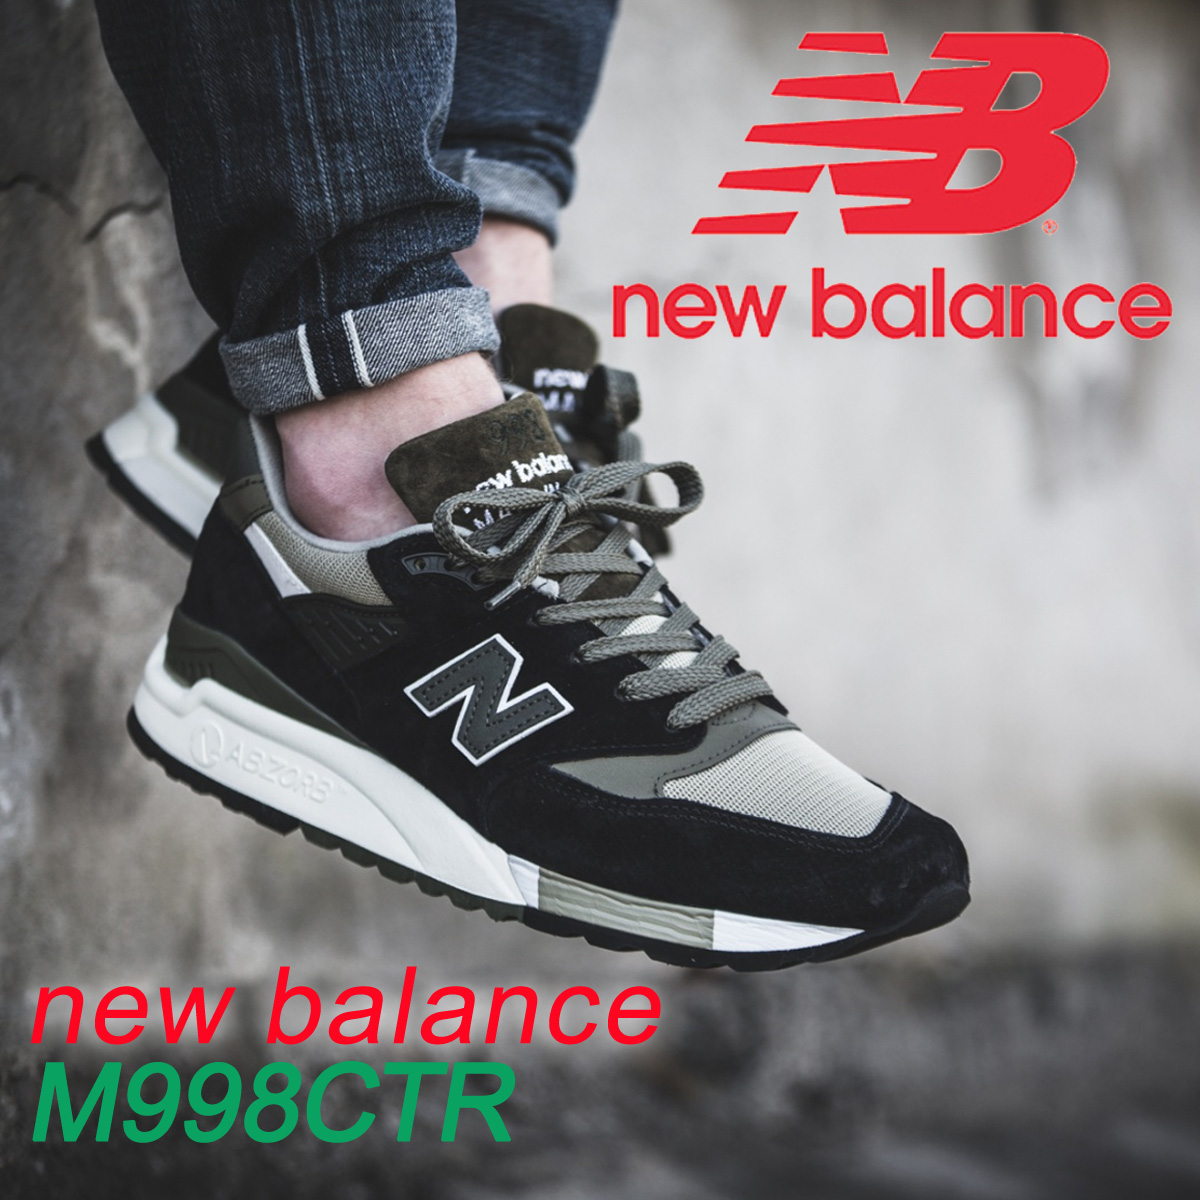 998 new balance shoes